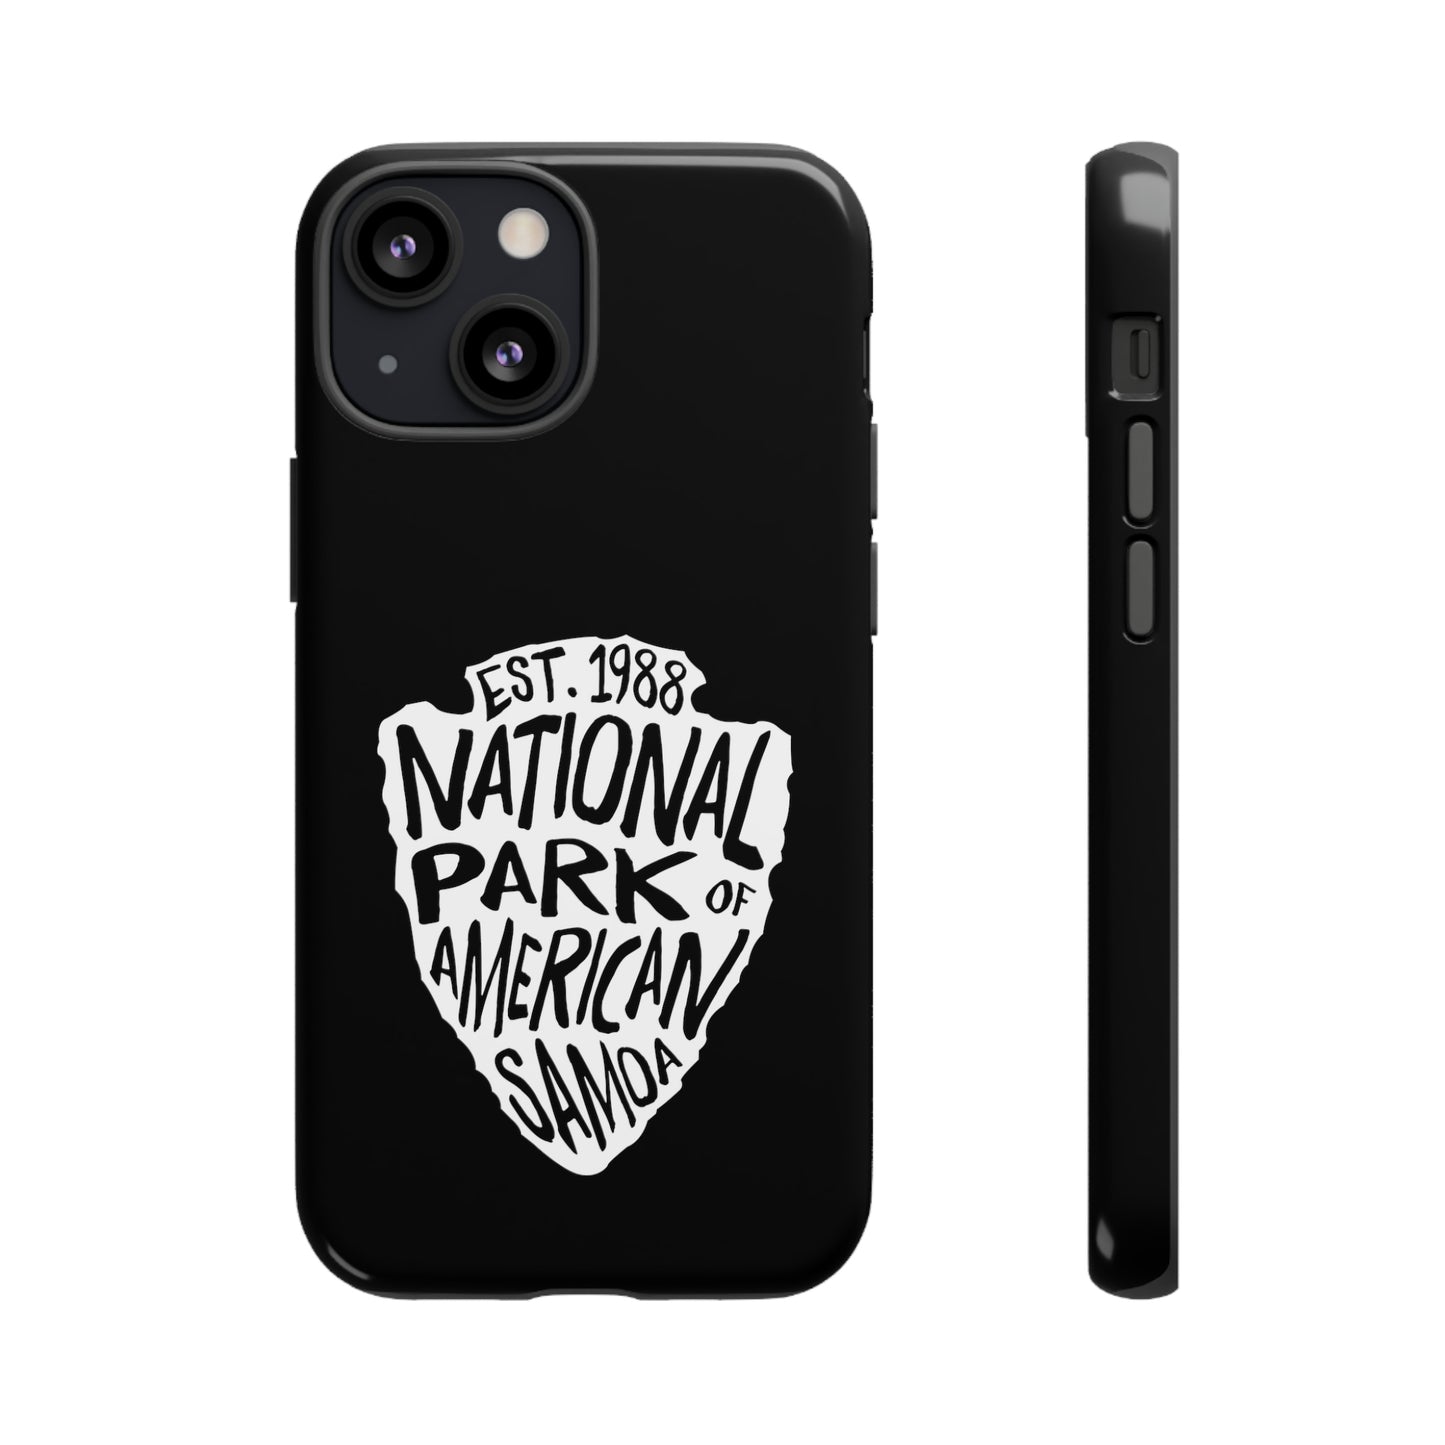 National Park of American Samoa Phone Case - Arrowhead Design